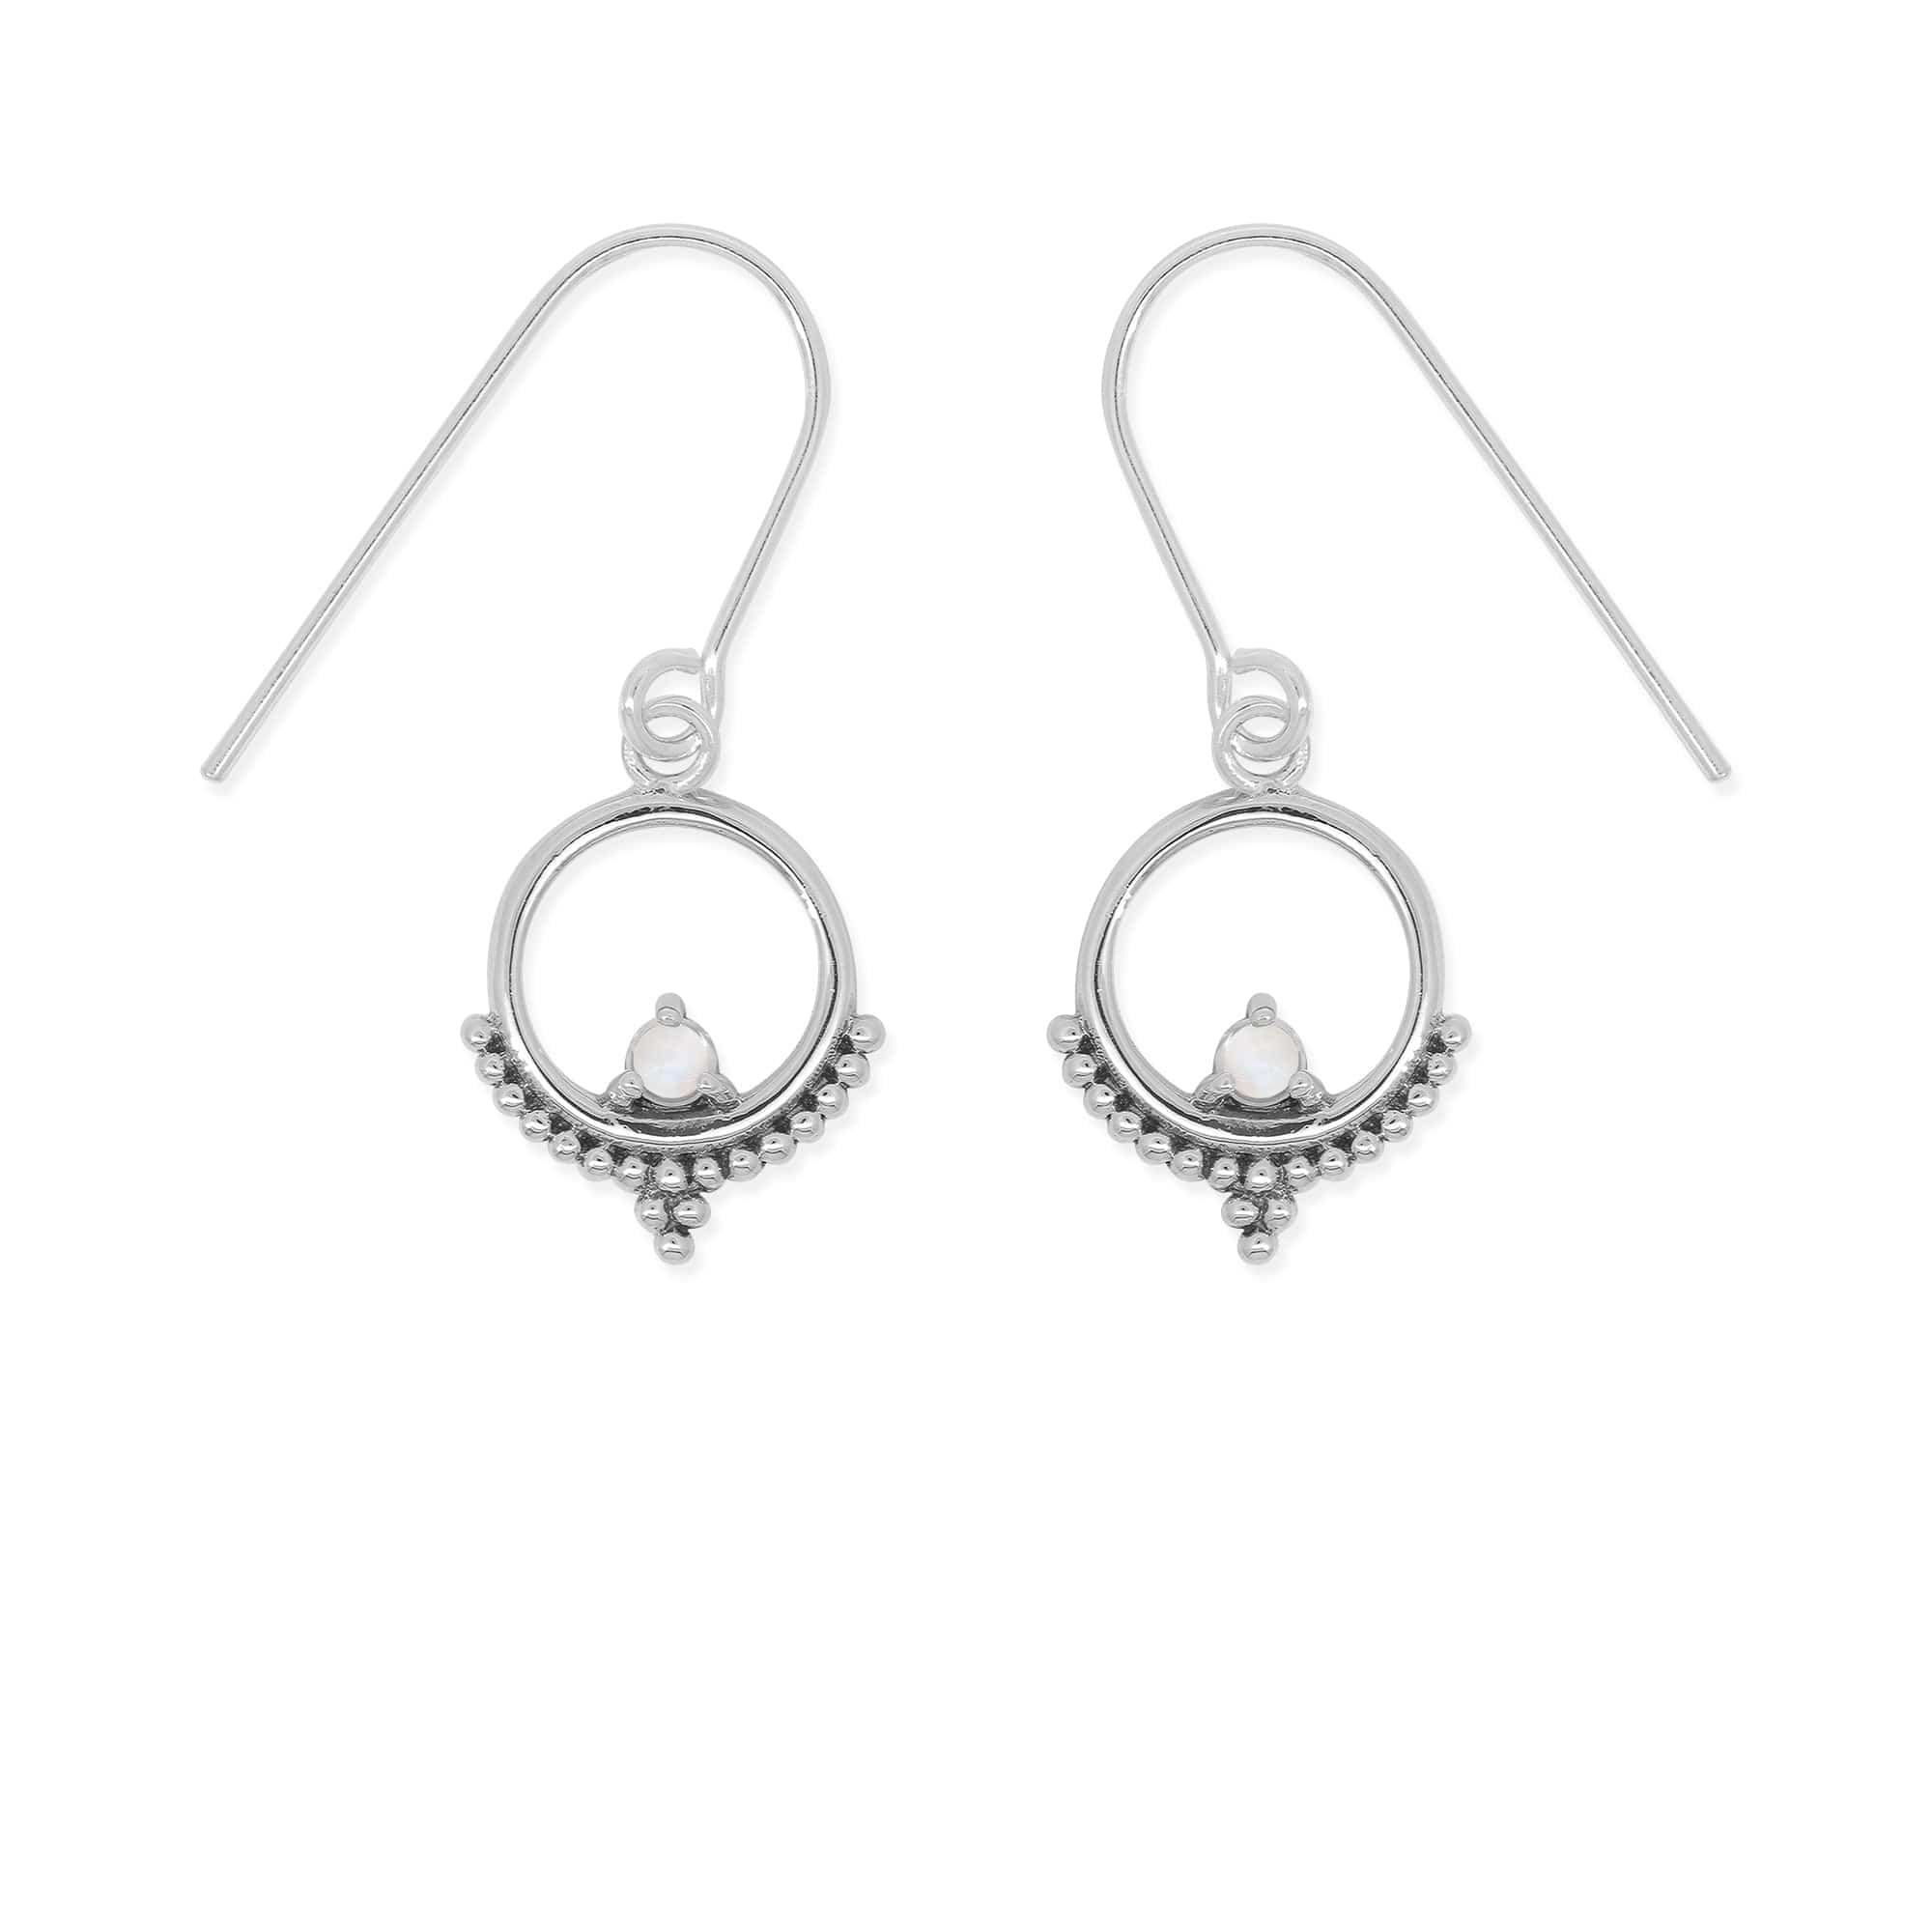 Boma Jewelry Earrings Bohemian Dot Circled Dangle Earrings with Stone